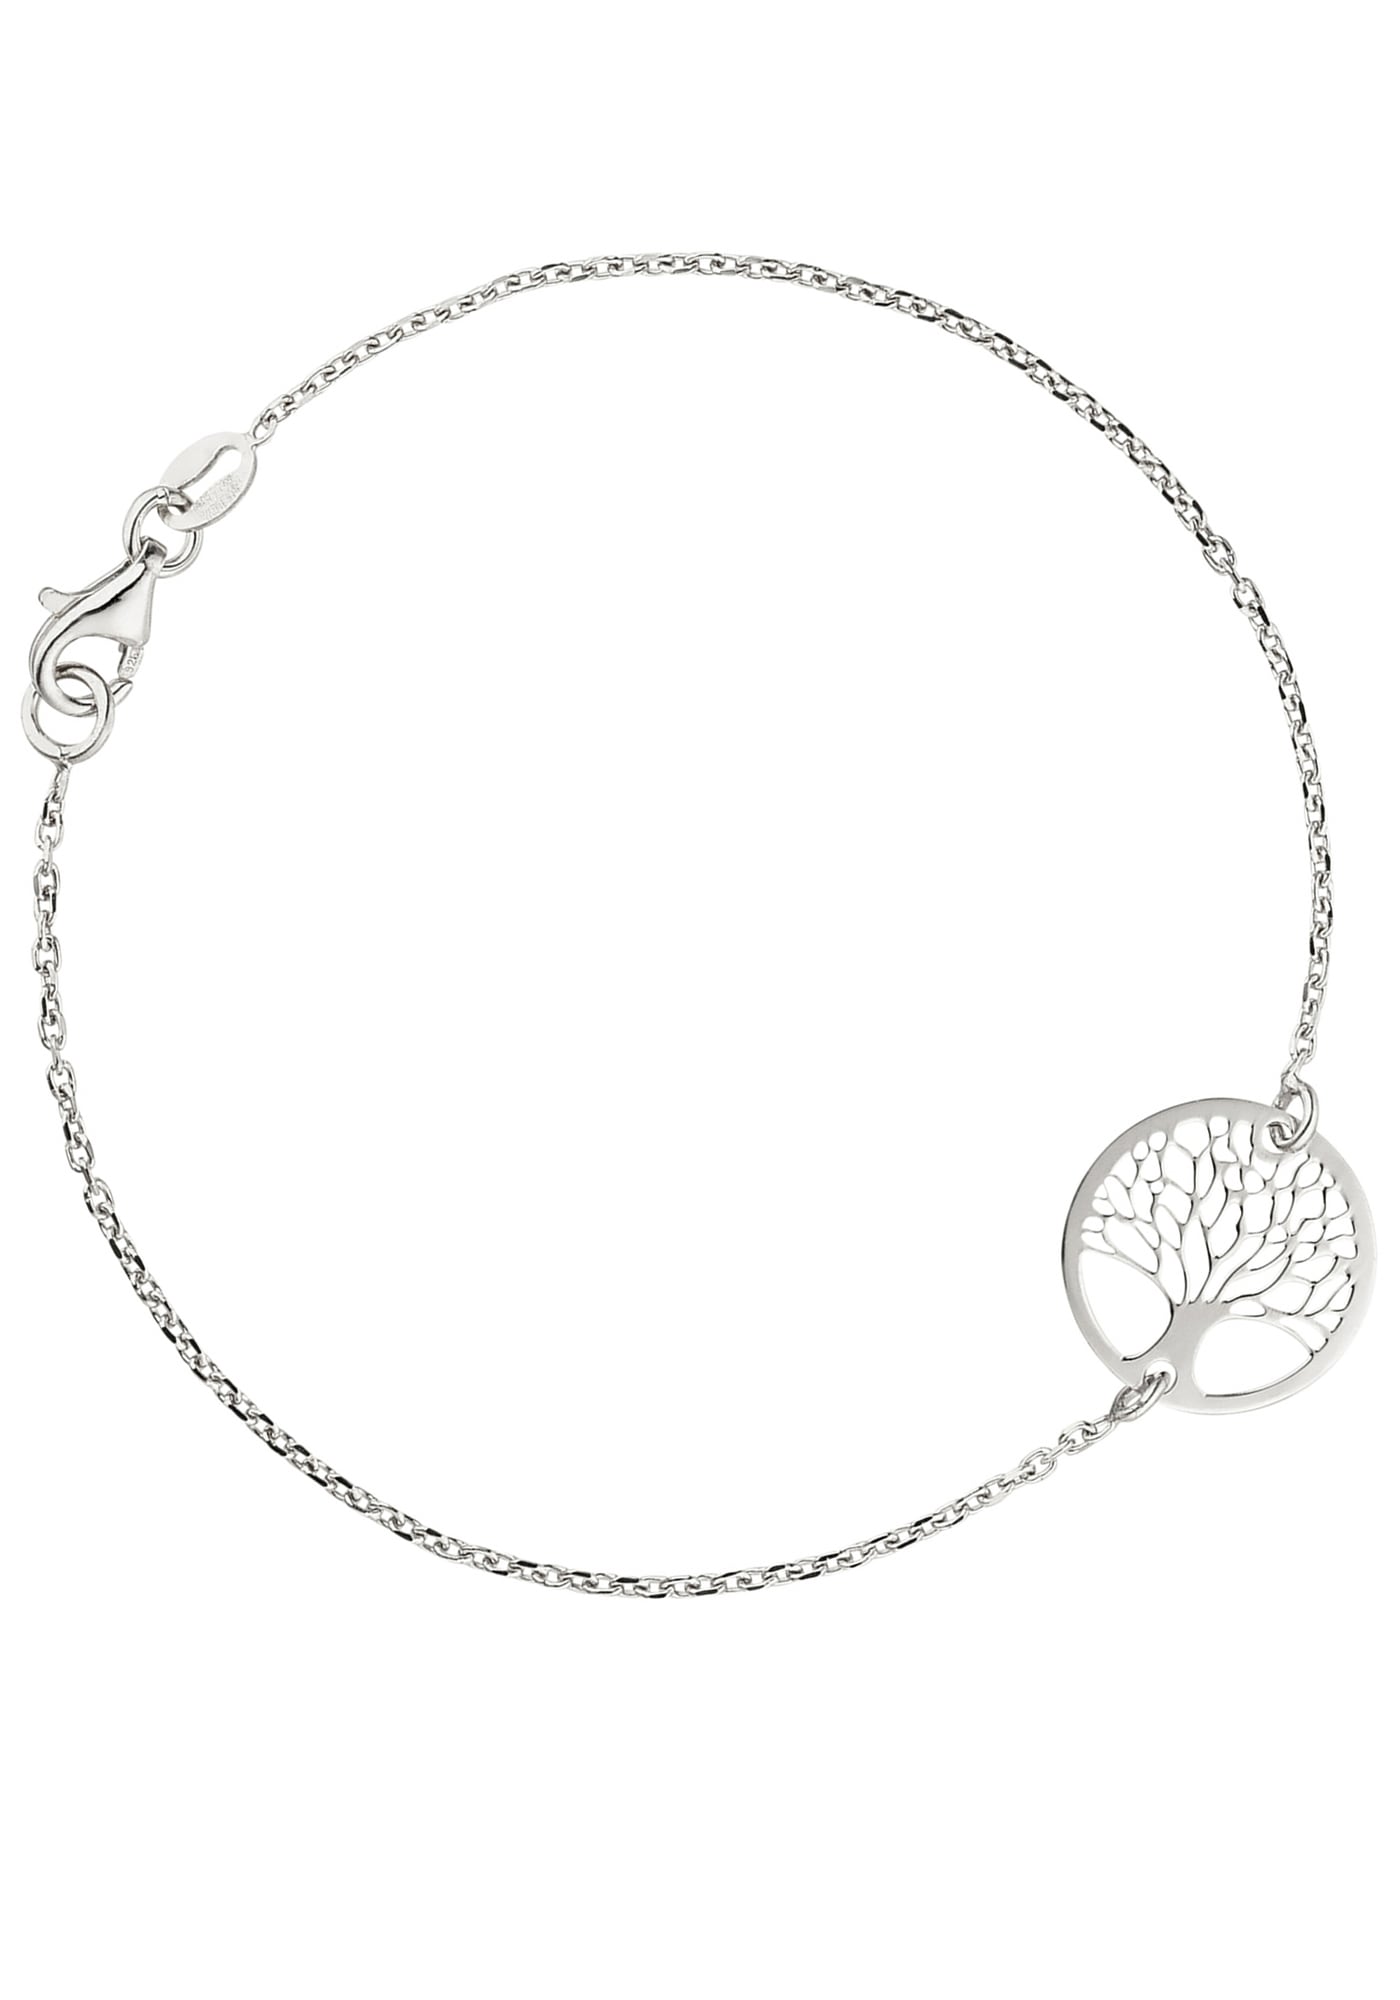 JOBO Silberarmband »Armband Lebensbaum«, 925 Silber 19 cm online kaufen |  I'm walking